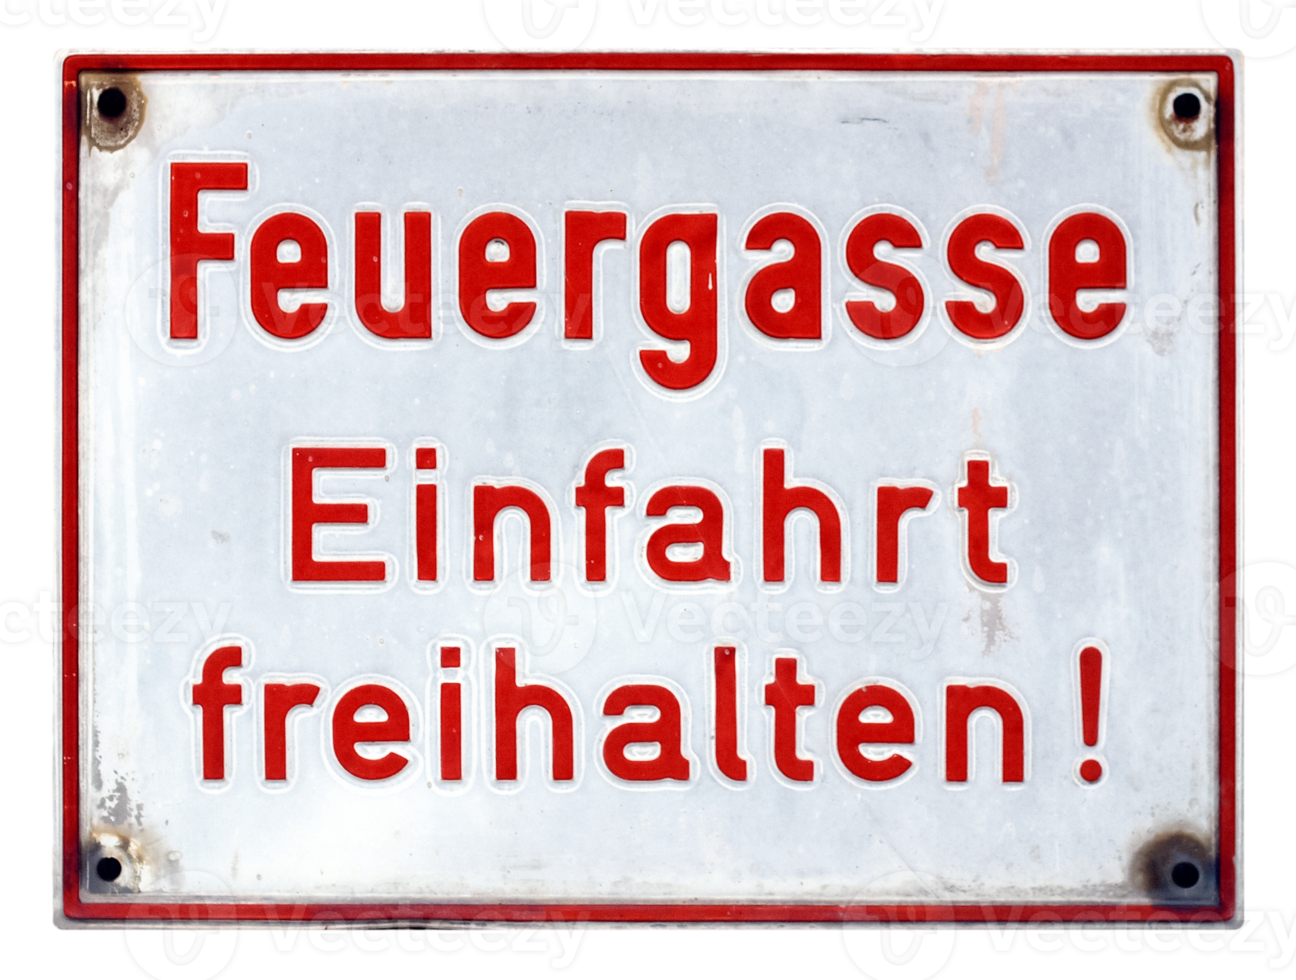 German sign transparent PNG. Fire lane, keep entrance clear png